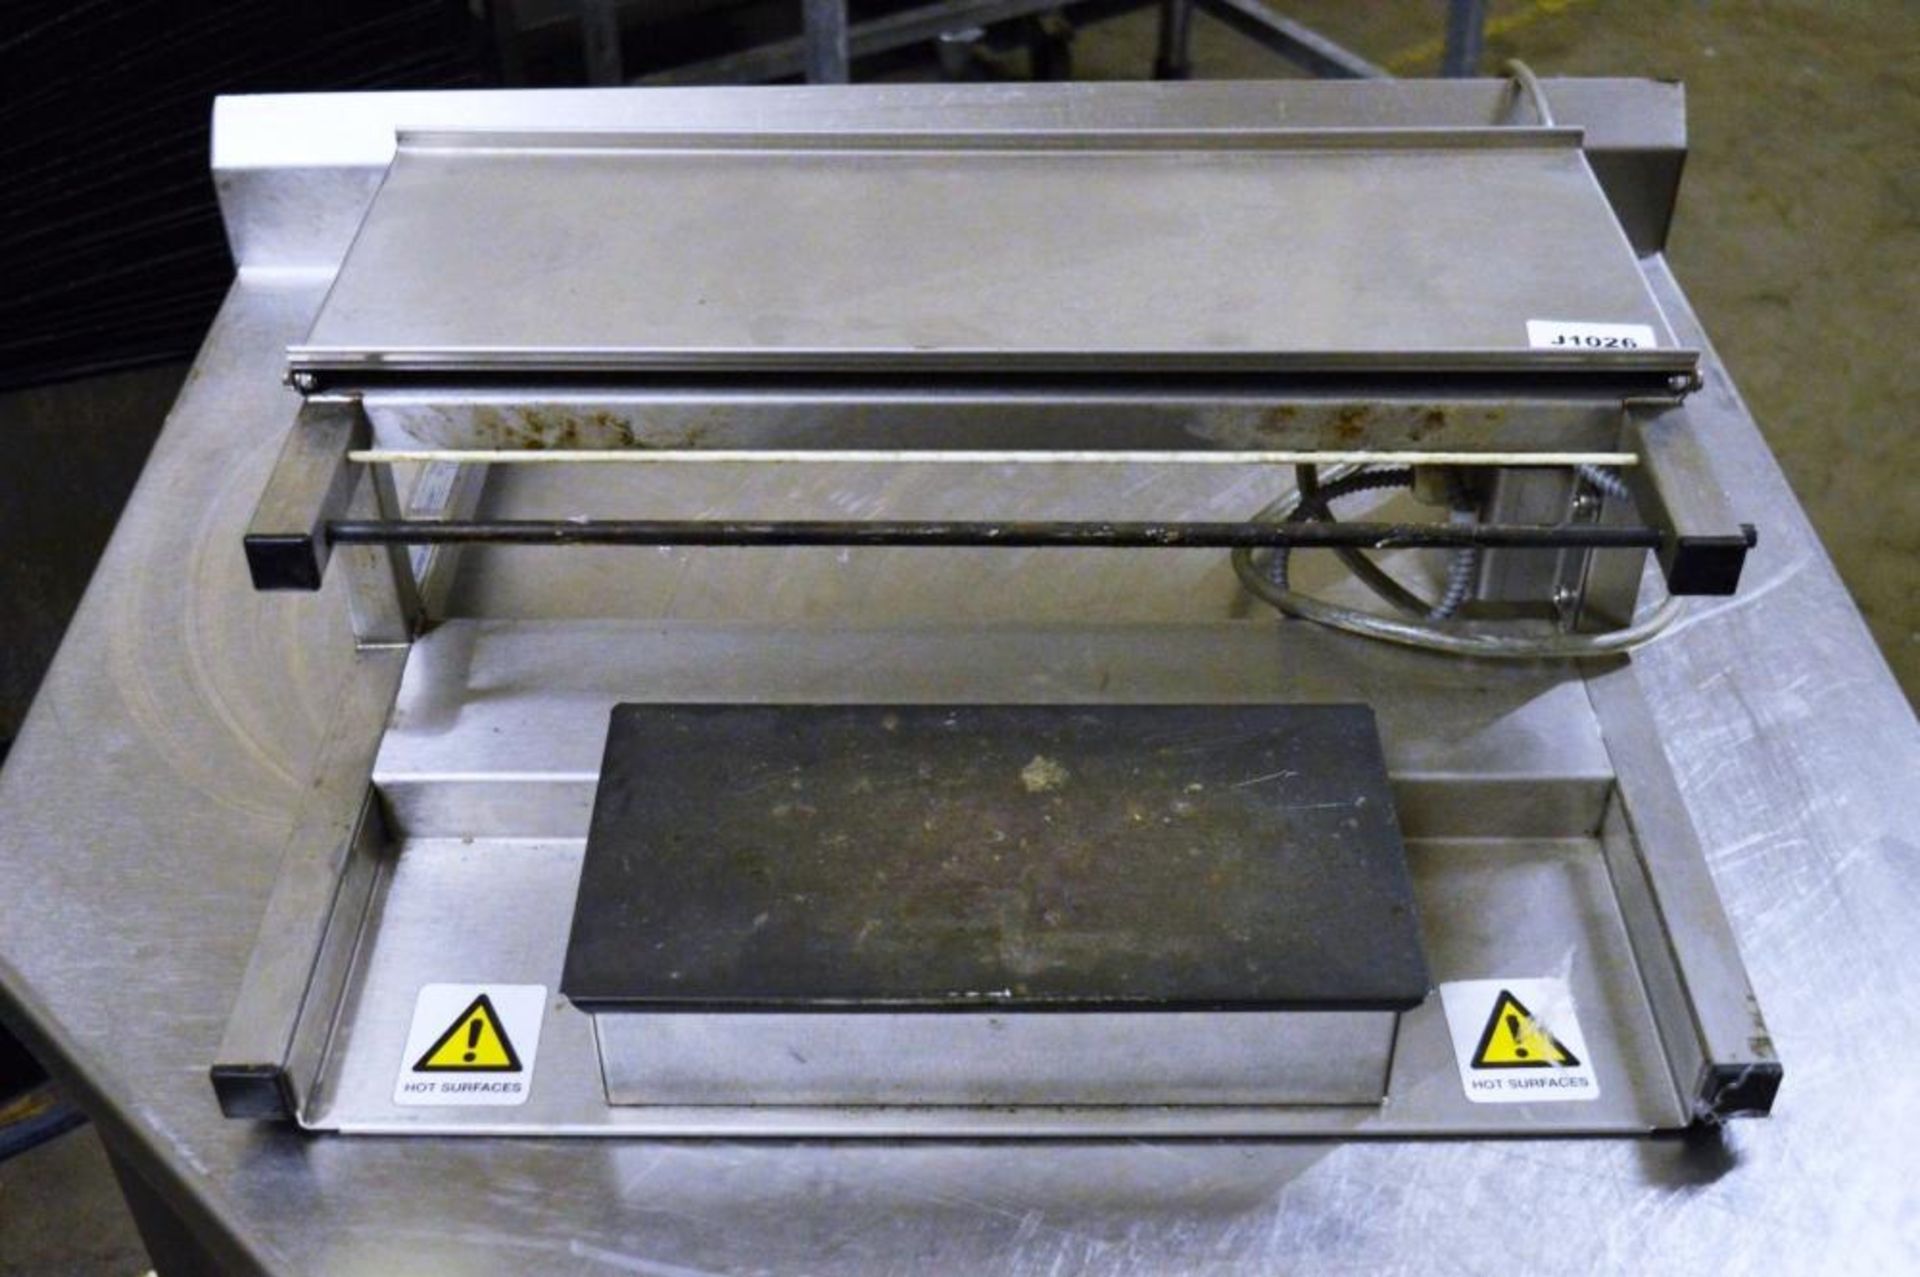 1 x Metalcraft 240v Countertop Food Tray Sealer - H18 x W56 x D61 cms - CL282 - Ref J1026 - Location